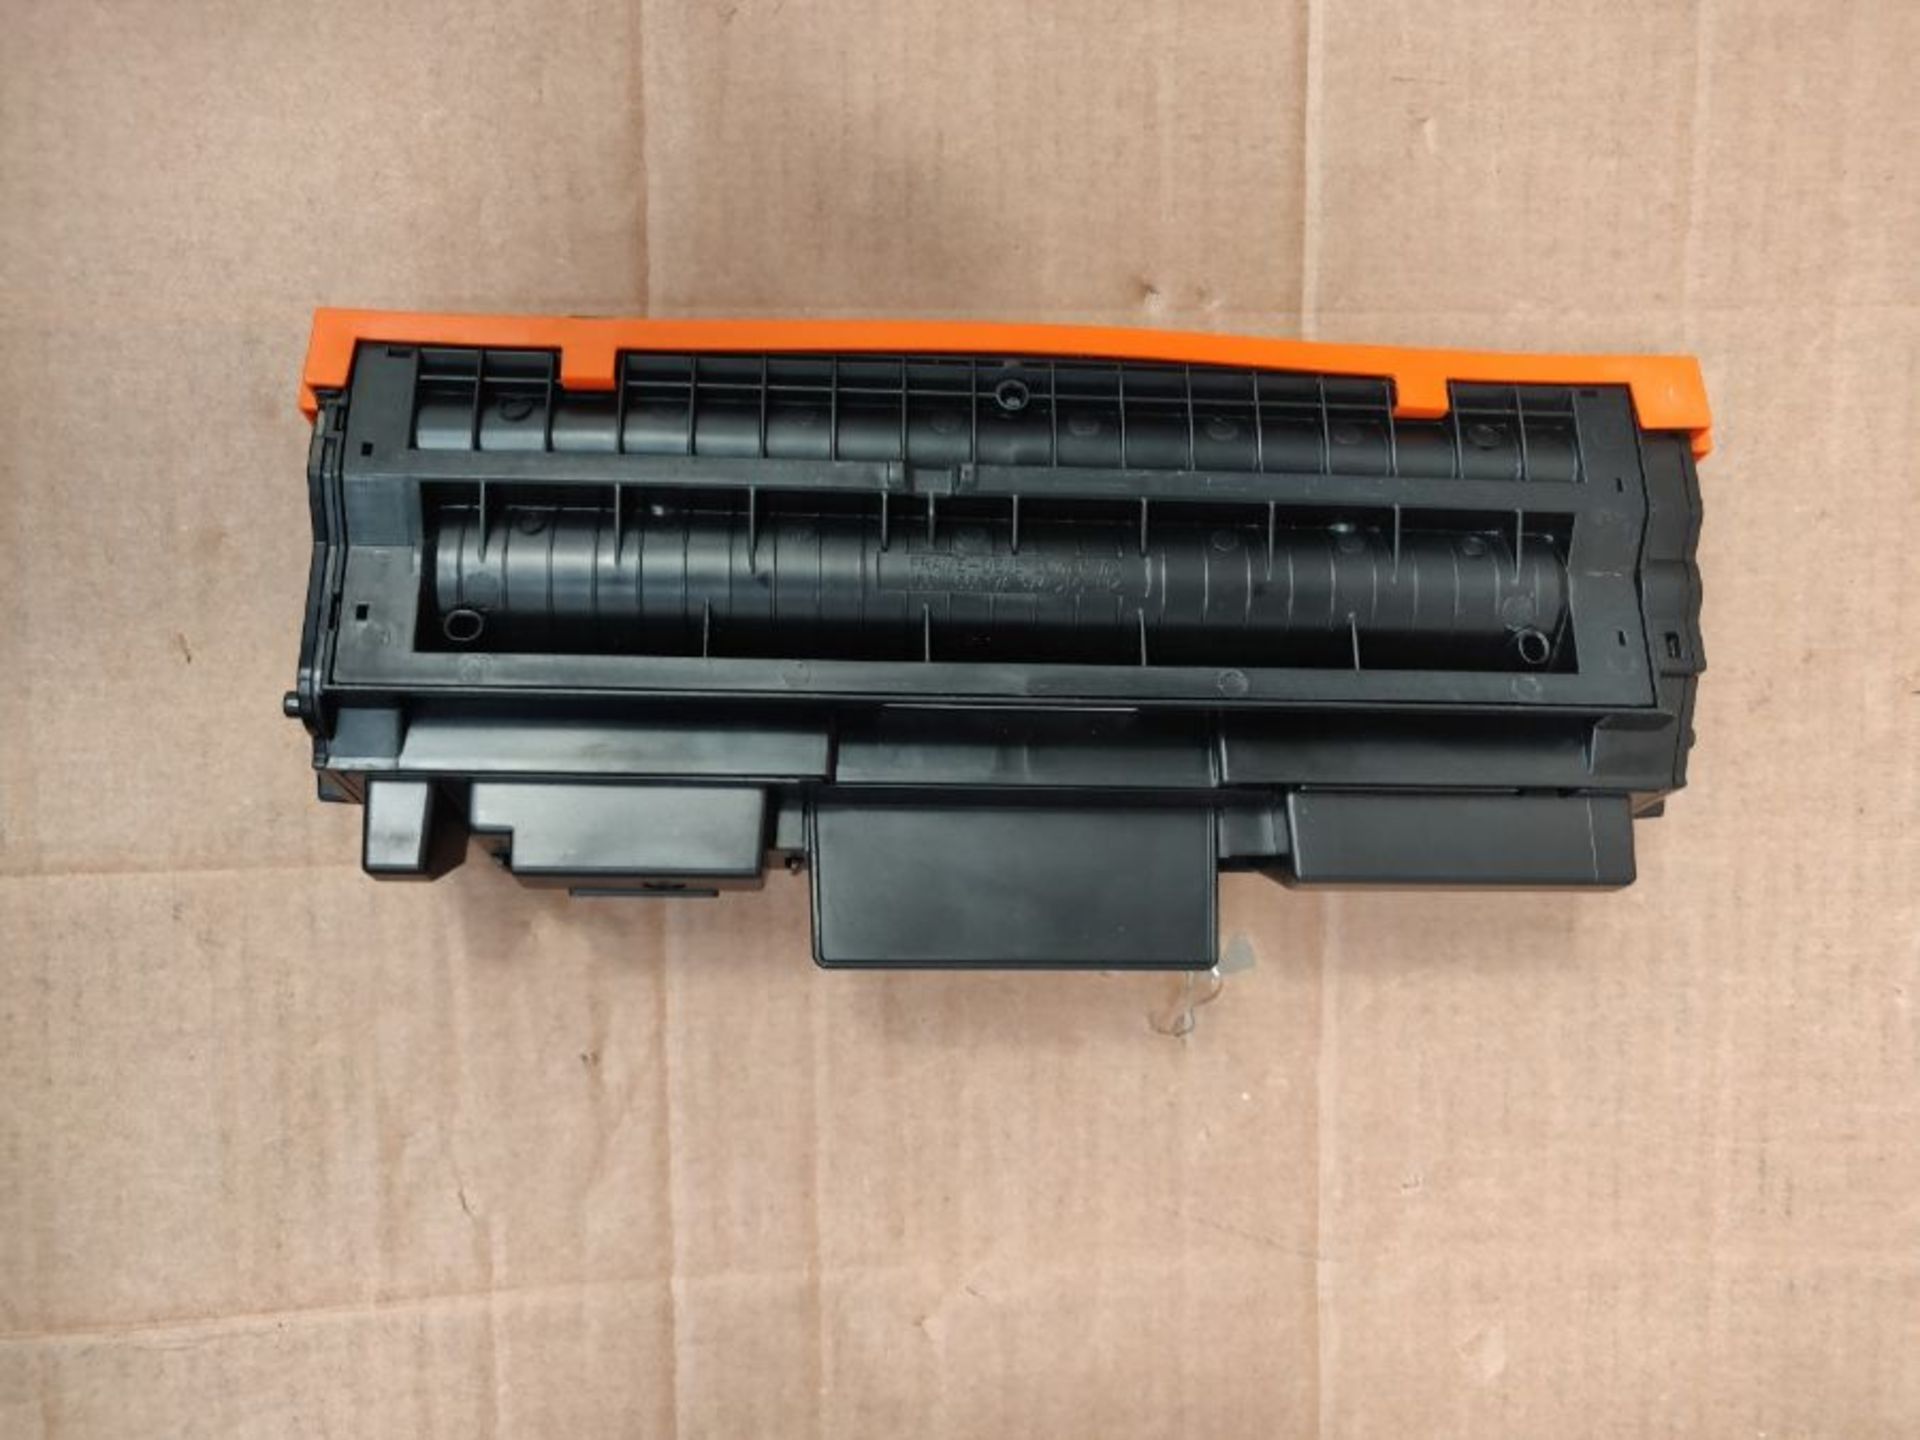 Samsung SU840A MLT-D116S Toner Cartridge, Black, Pack of 1 - Image 3 of 3